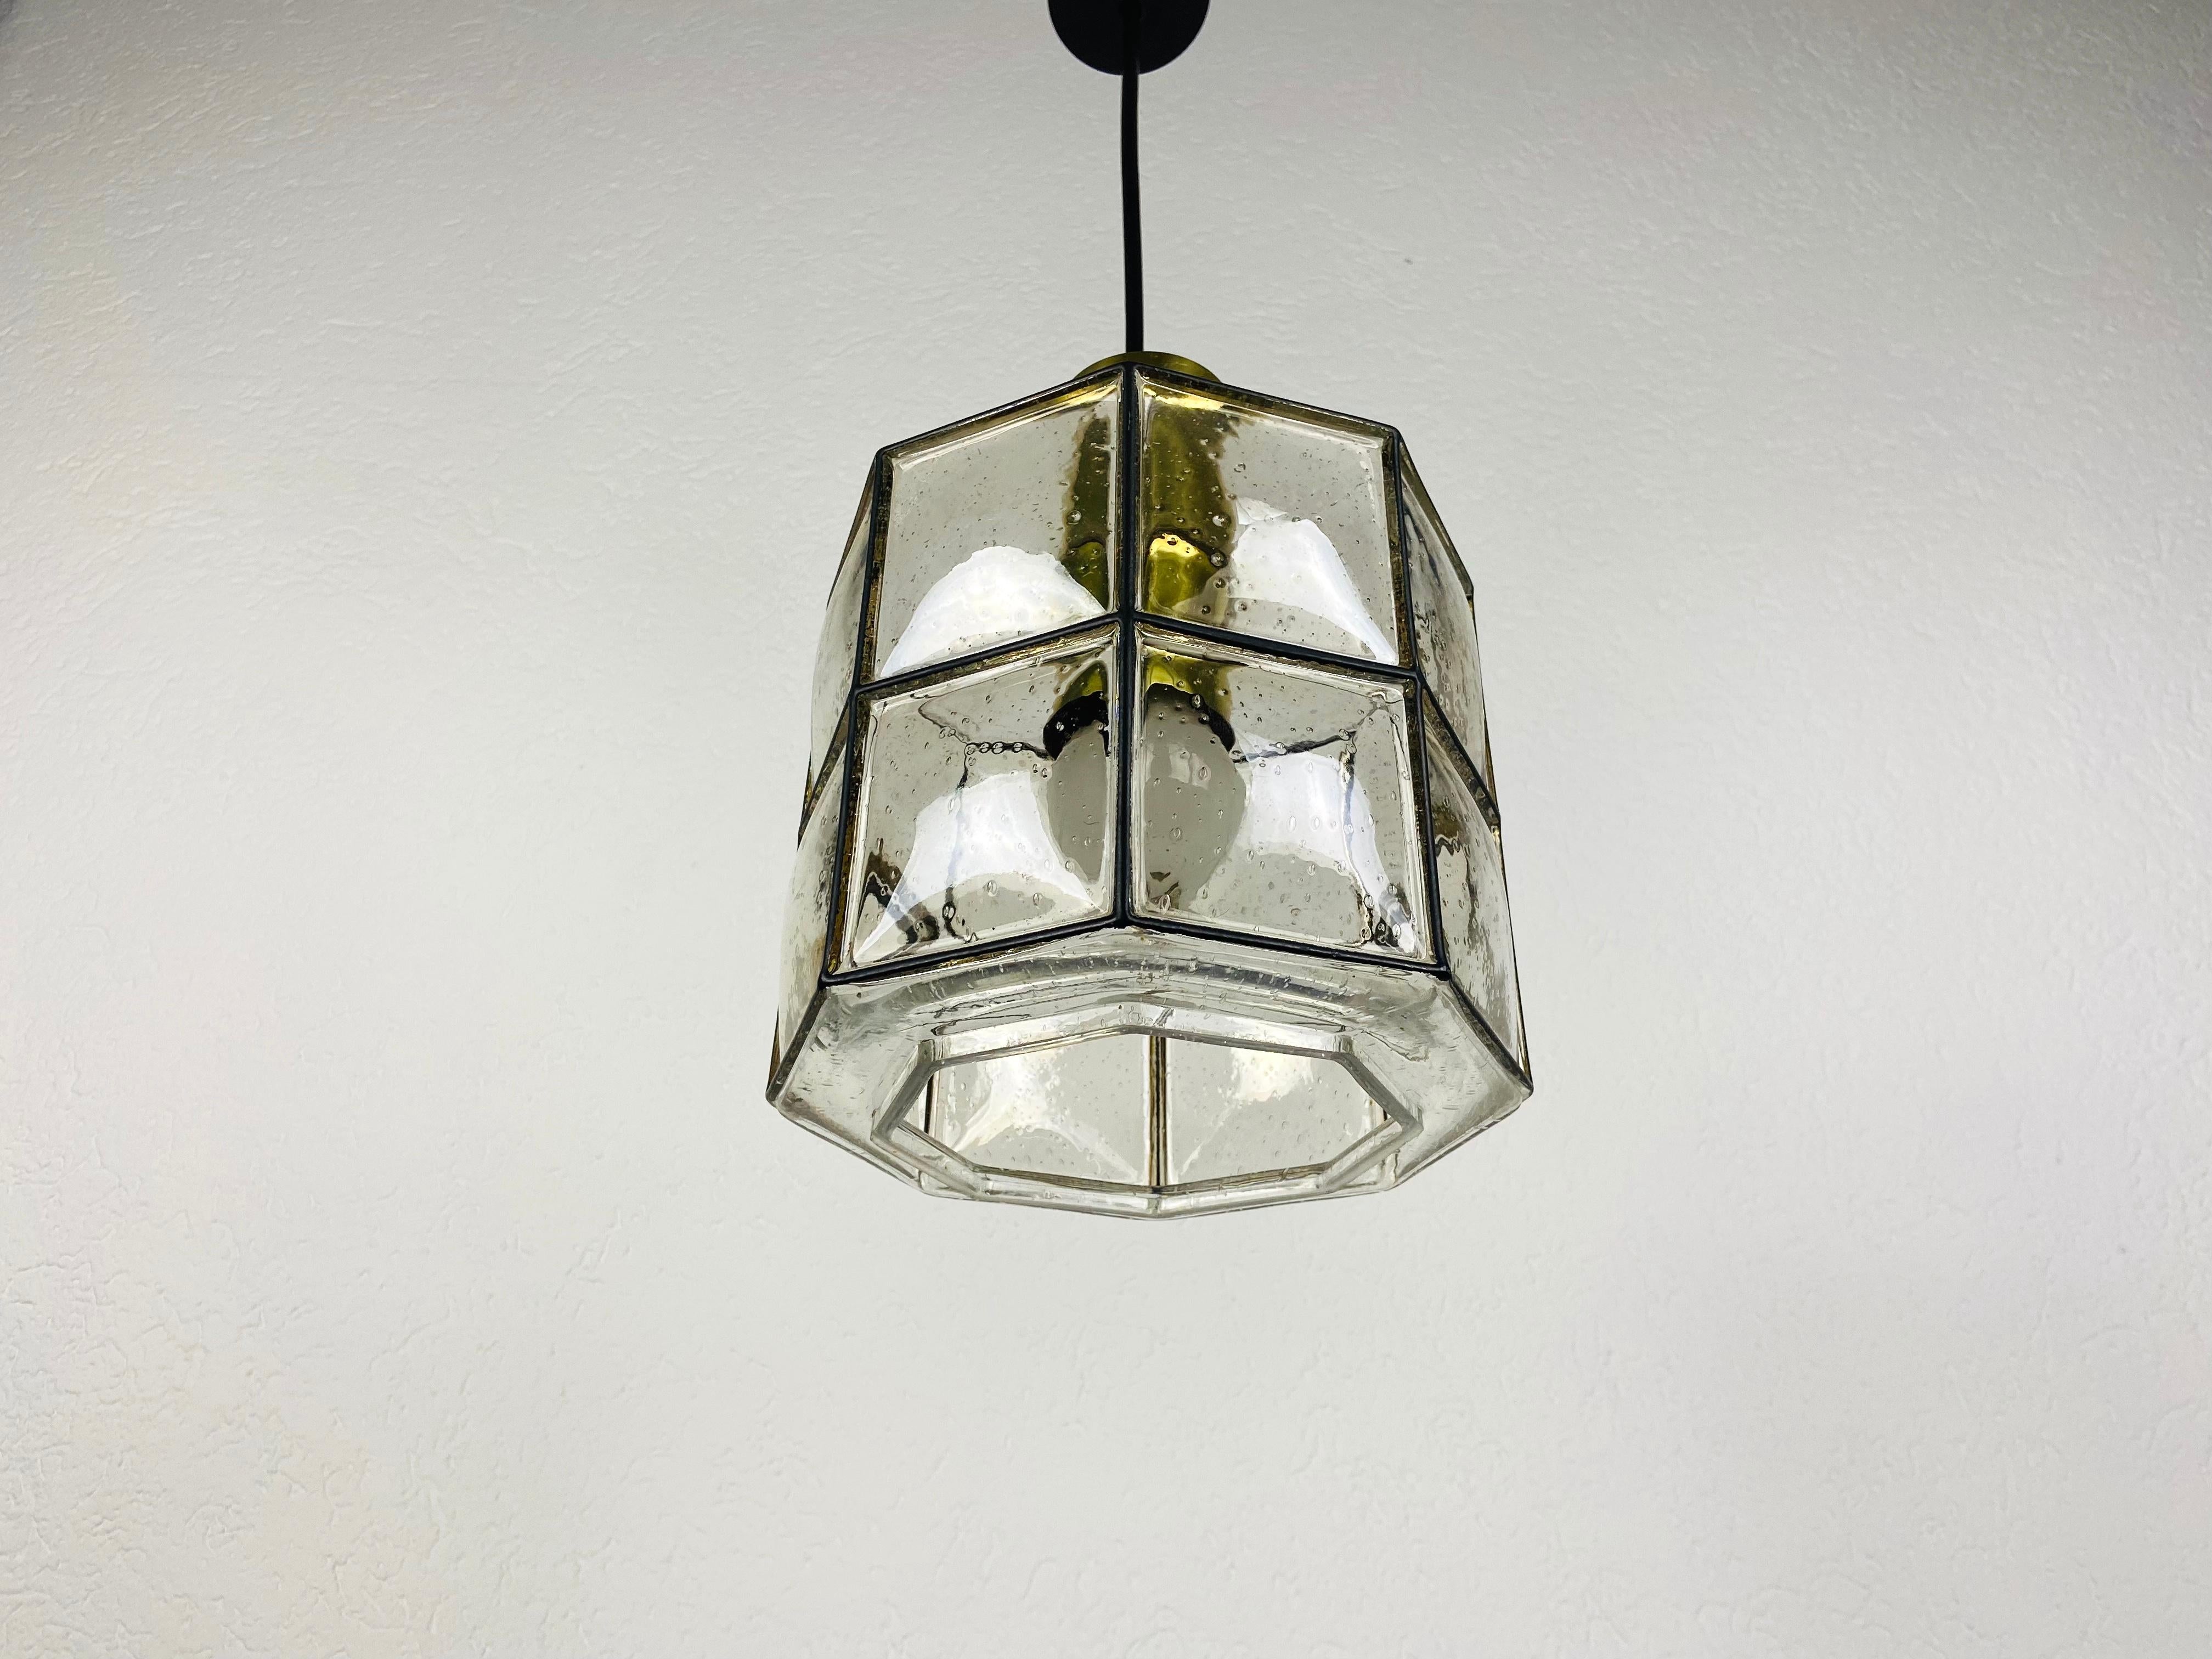 Midcentury Iron and Bubble Glass Pendant Lamp by Glashütte Limburg, 1960s For Sale 5